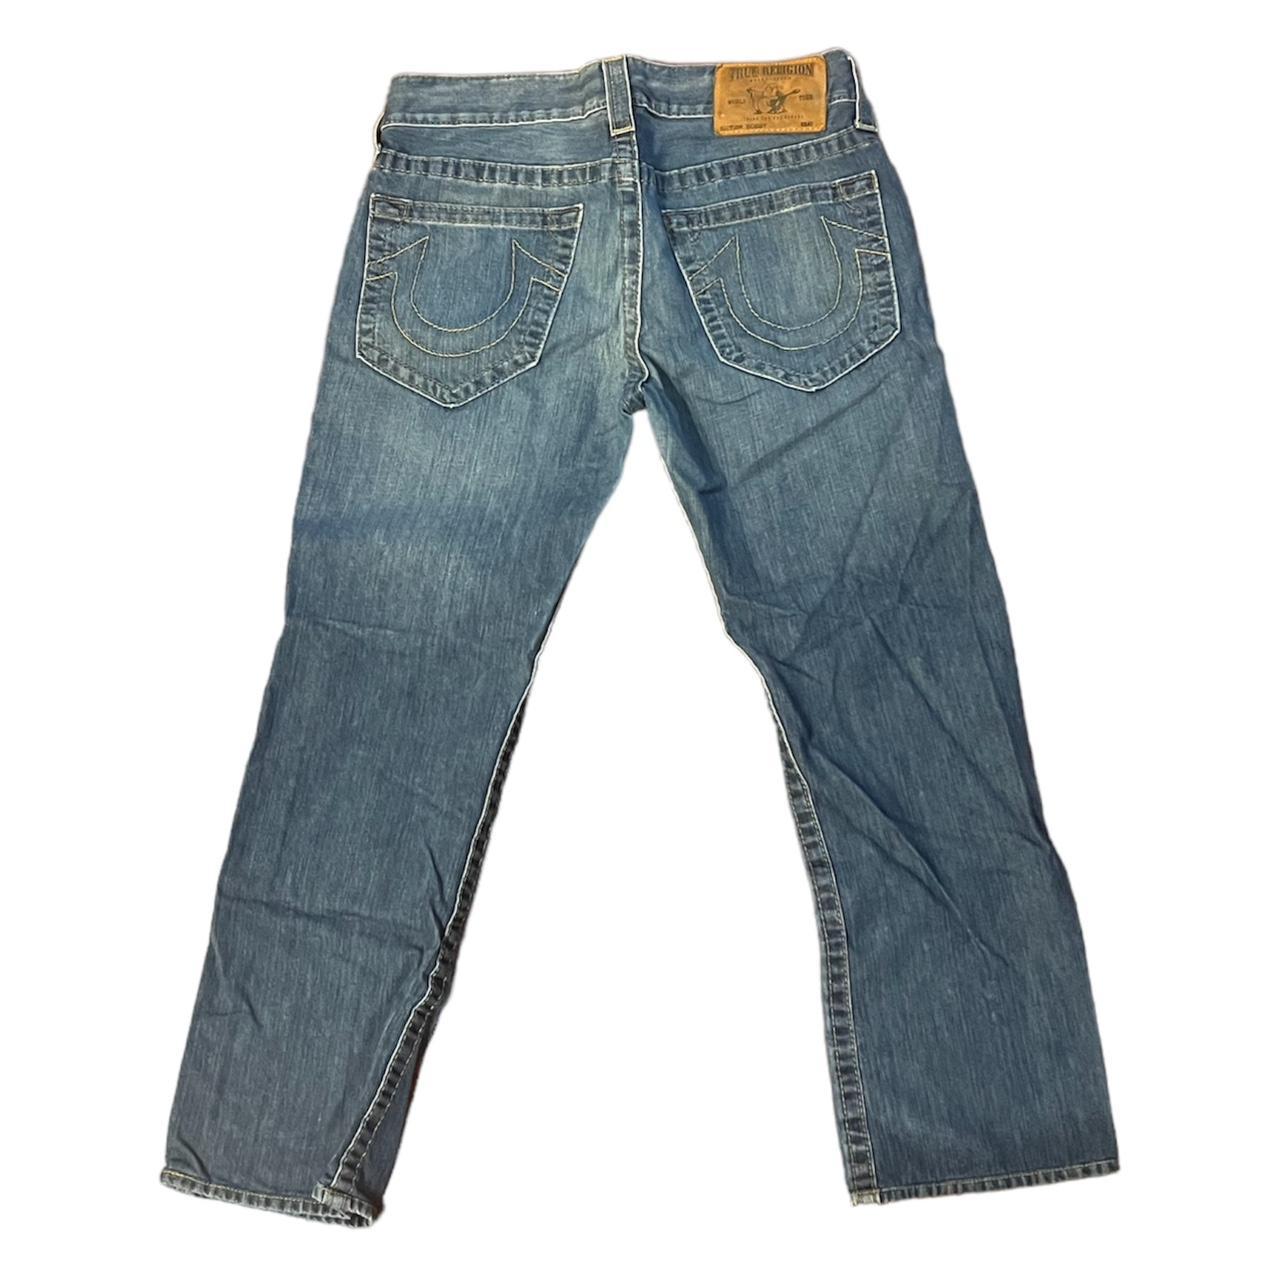 Vintage True Religion Jeans Size 31 No holes/stain... - Depop